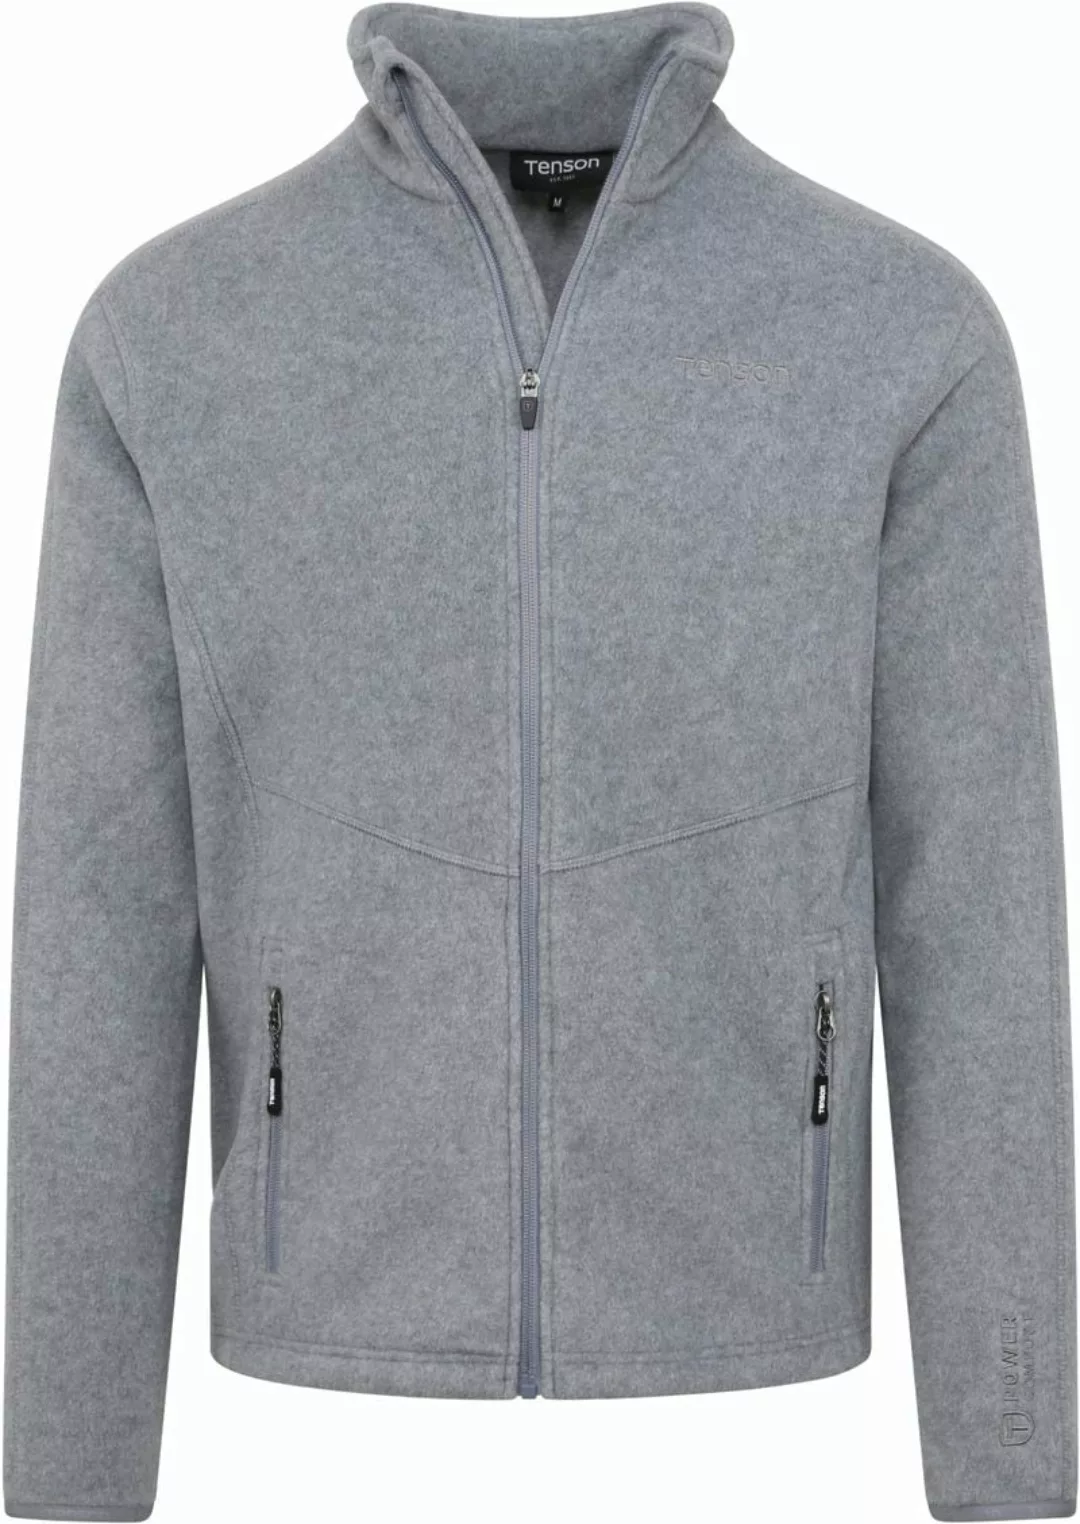 Tenson Miracle Fleece Jacke Grau - Größe XL günstig online kaufen